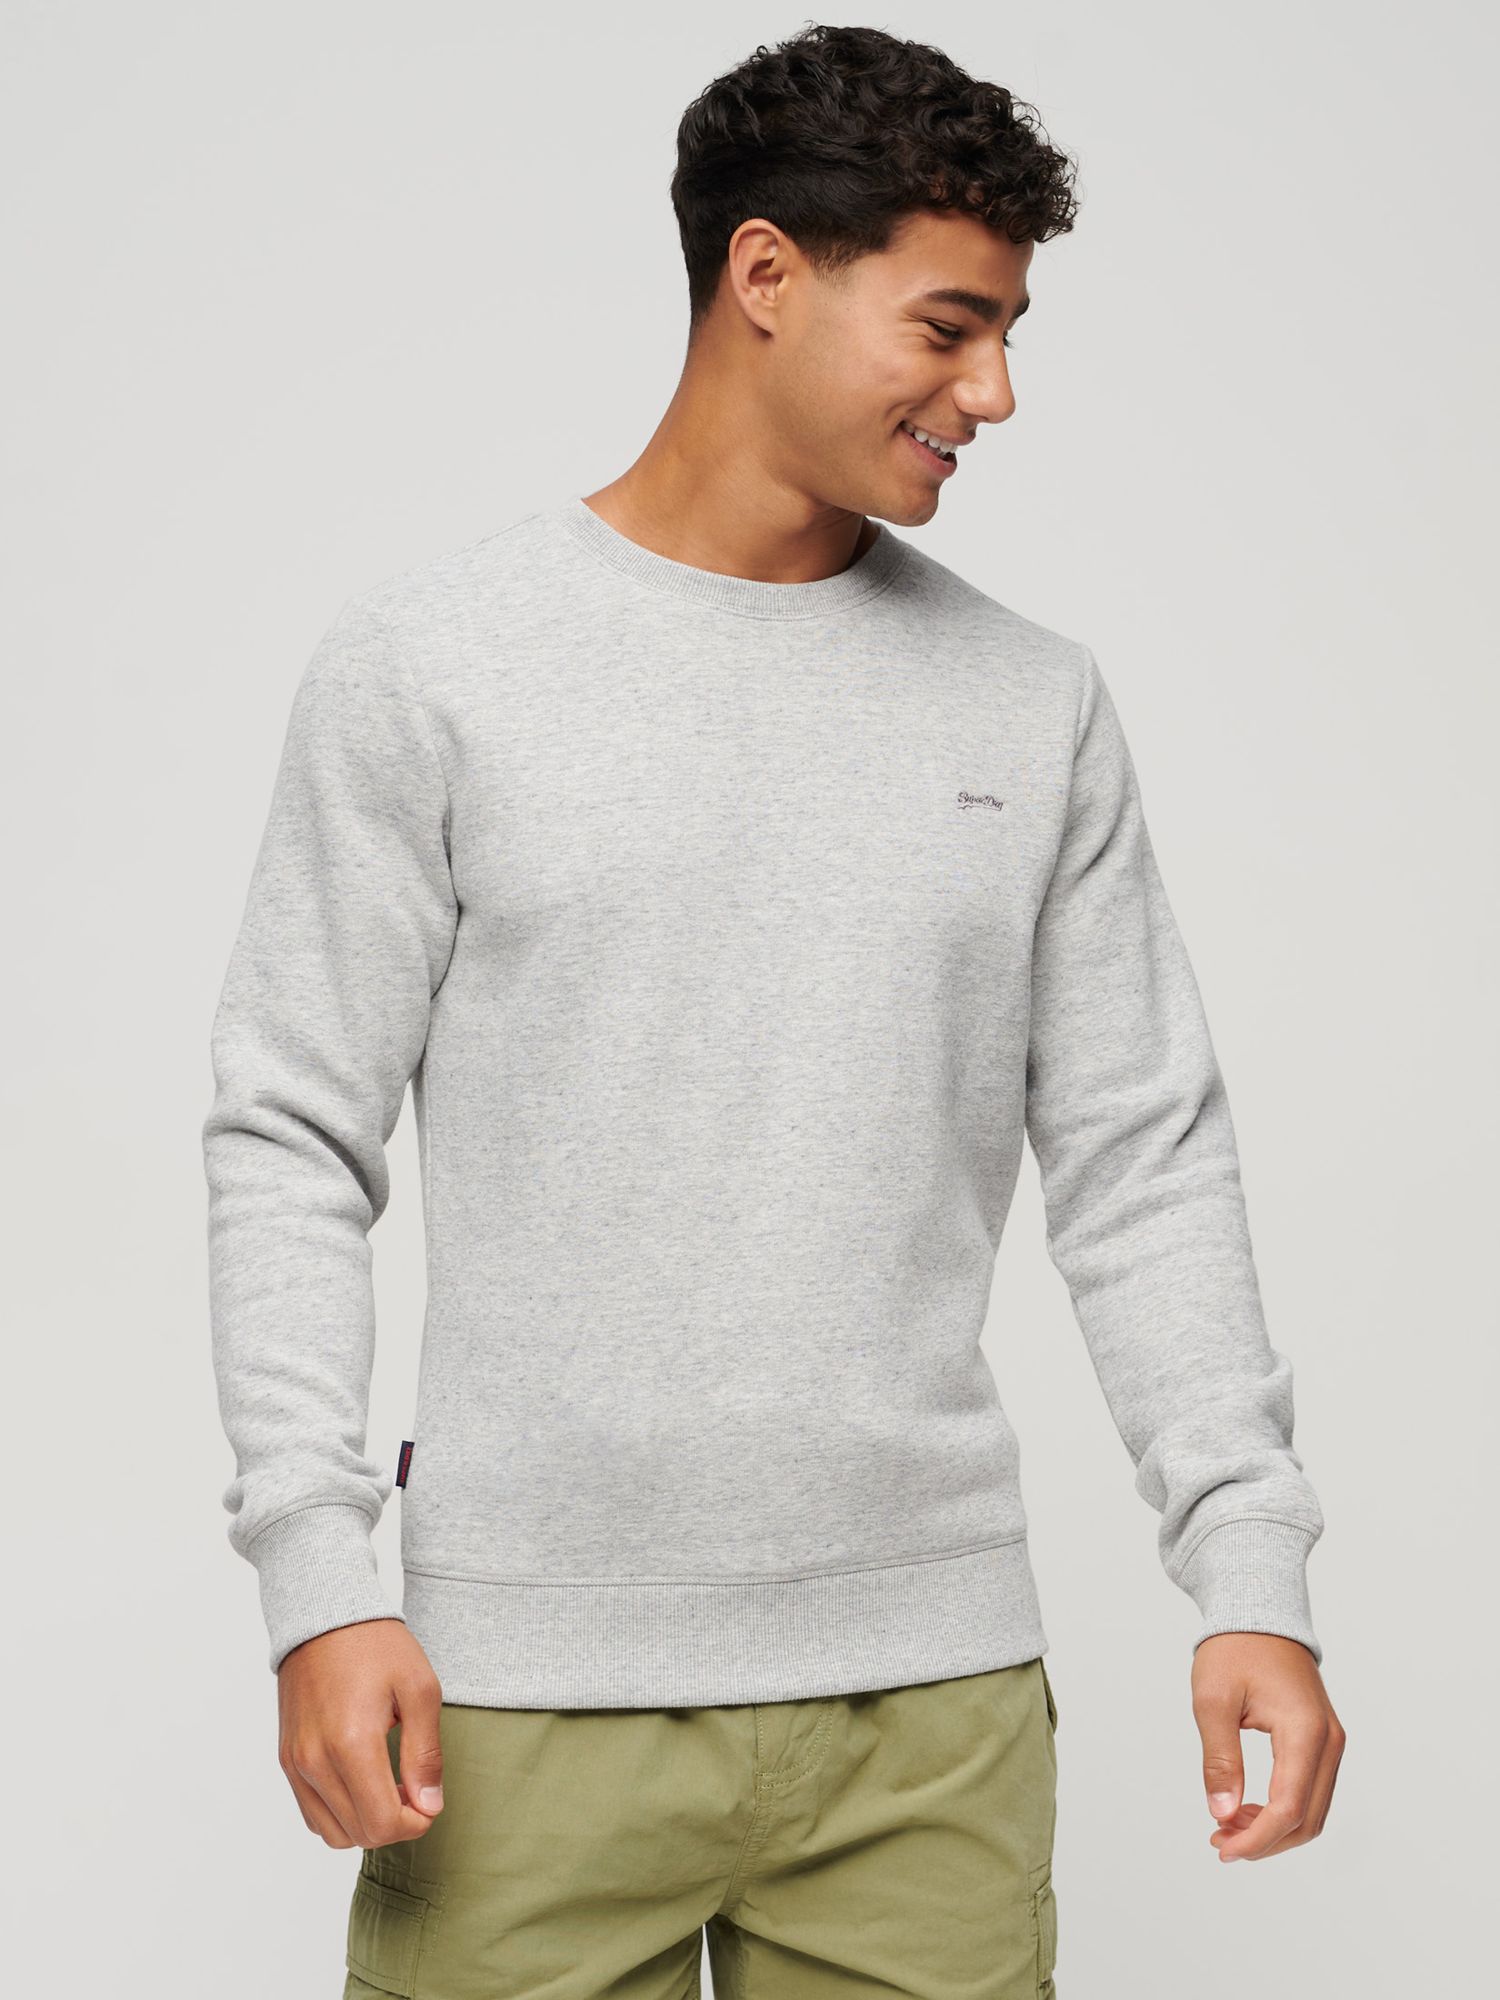 Terra and Sky sweatshirt  Clothes design, Fashion, Sweatshirts